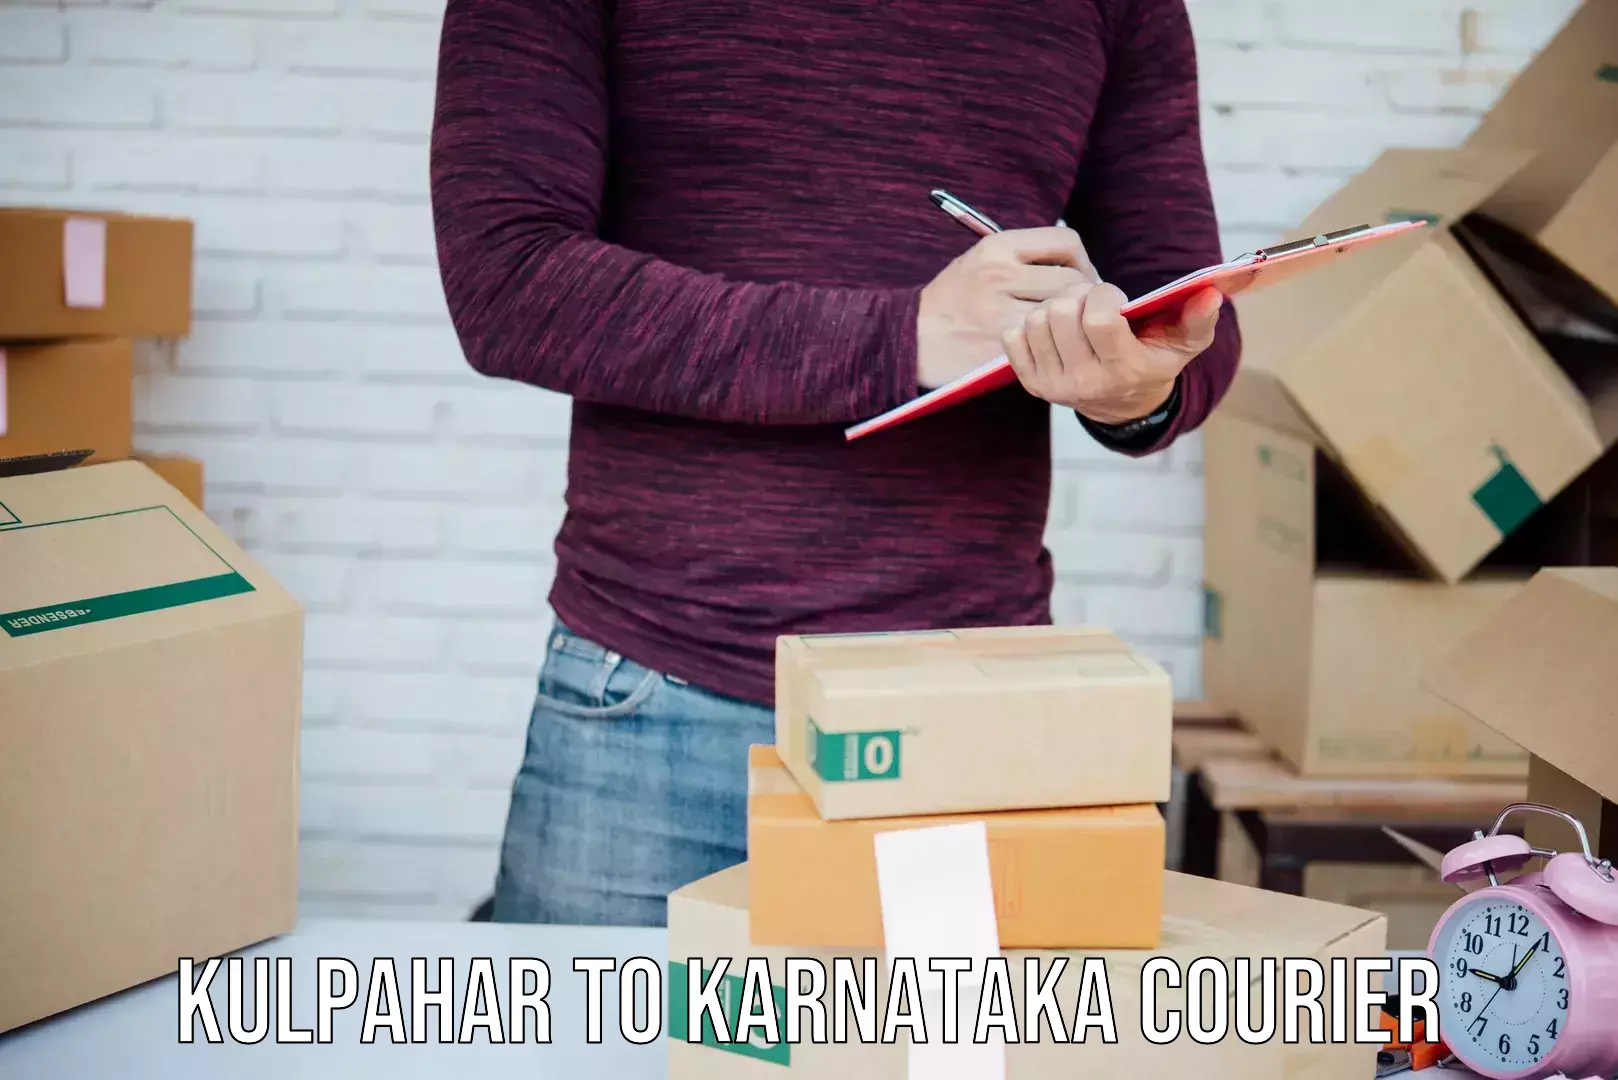 Next-day delivery options Kulpahar to Bangarapet